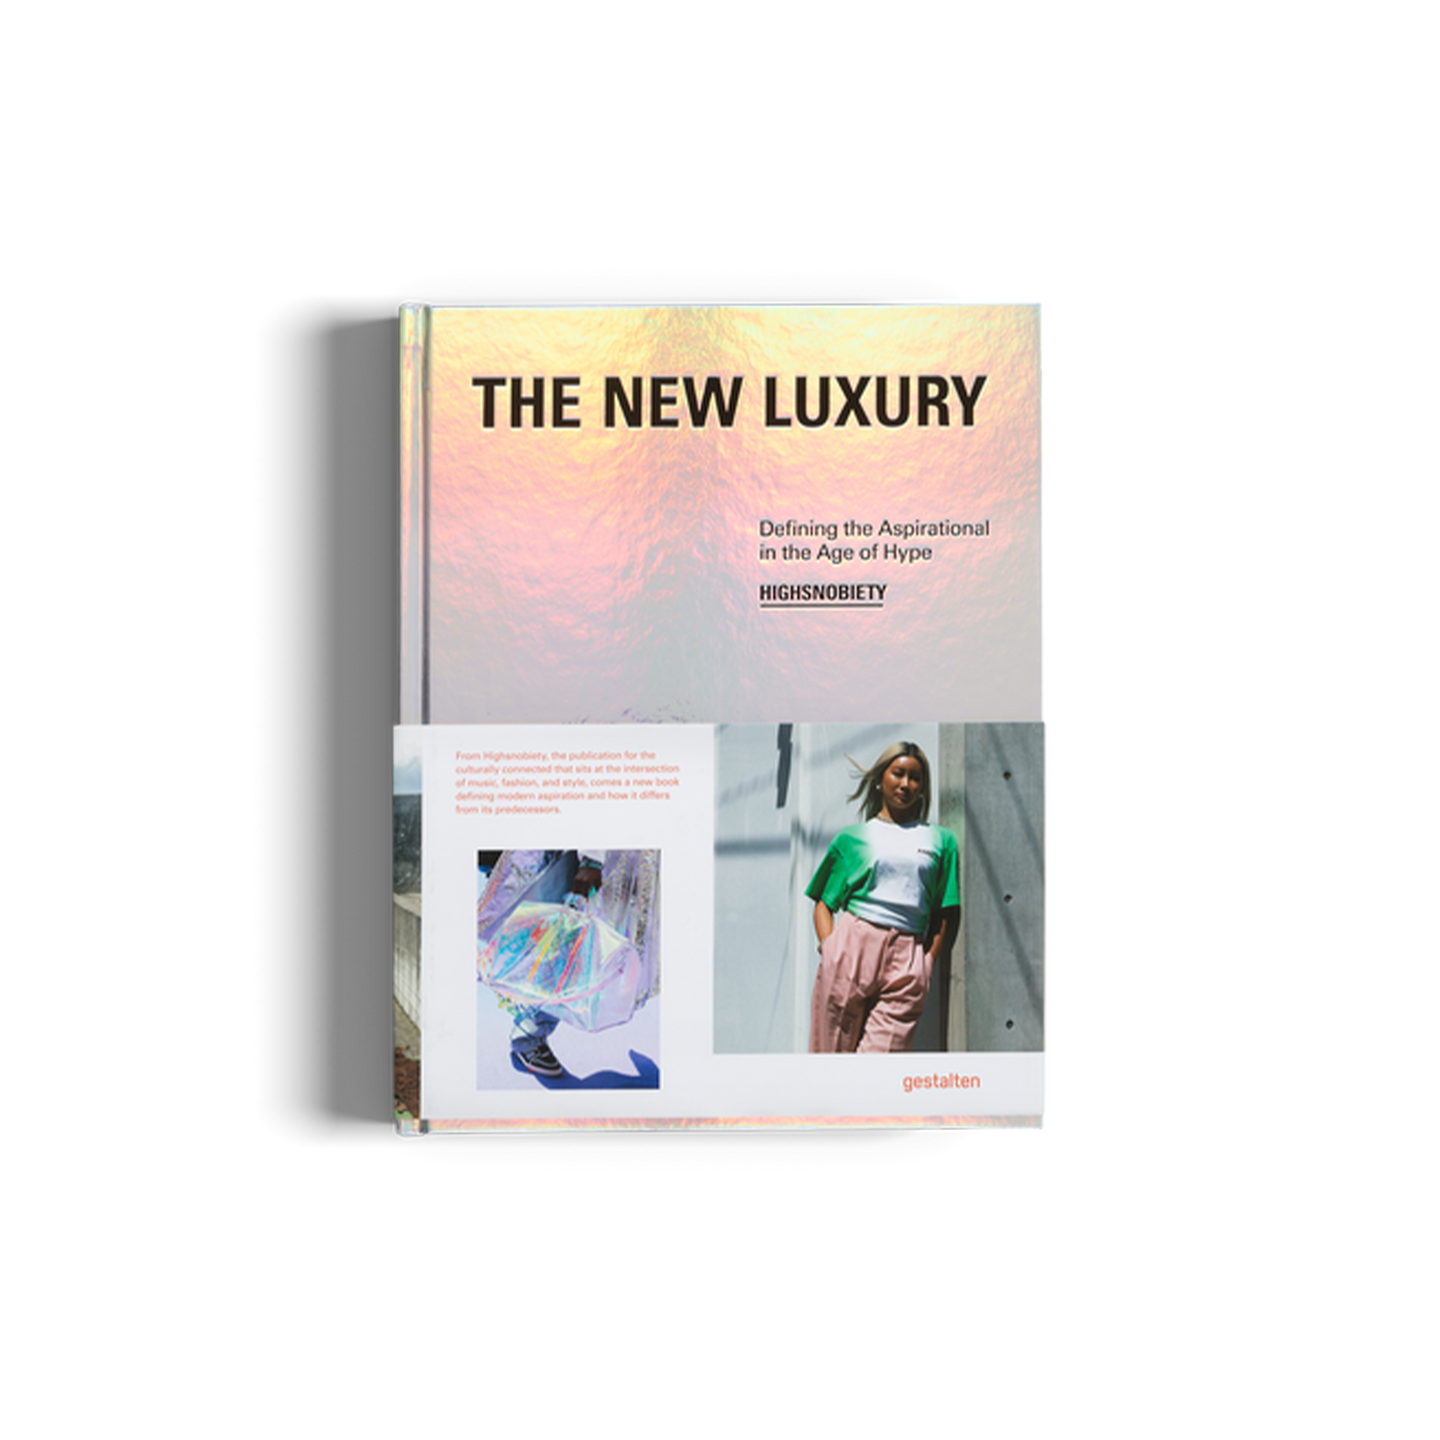 The New Luxury by Highsnobiety